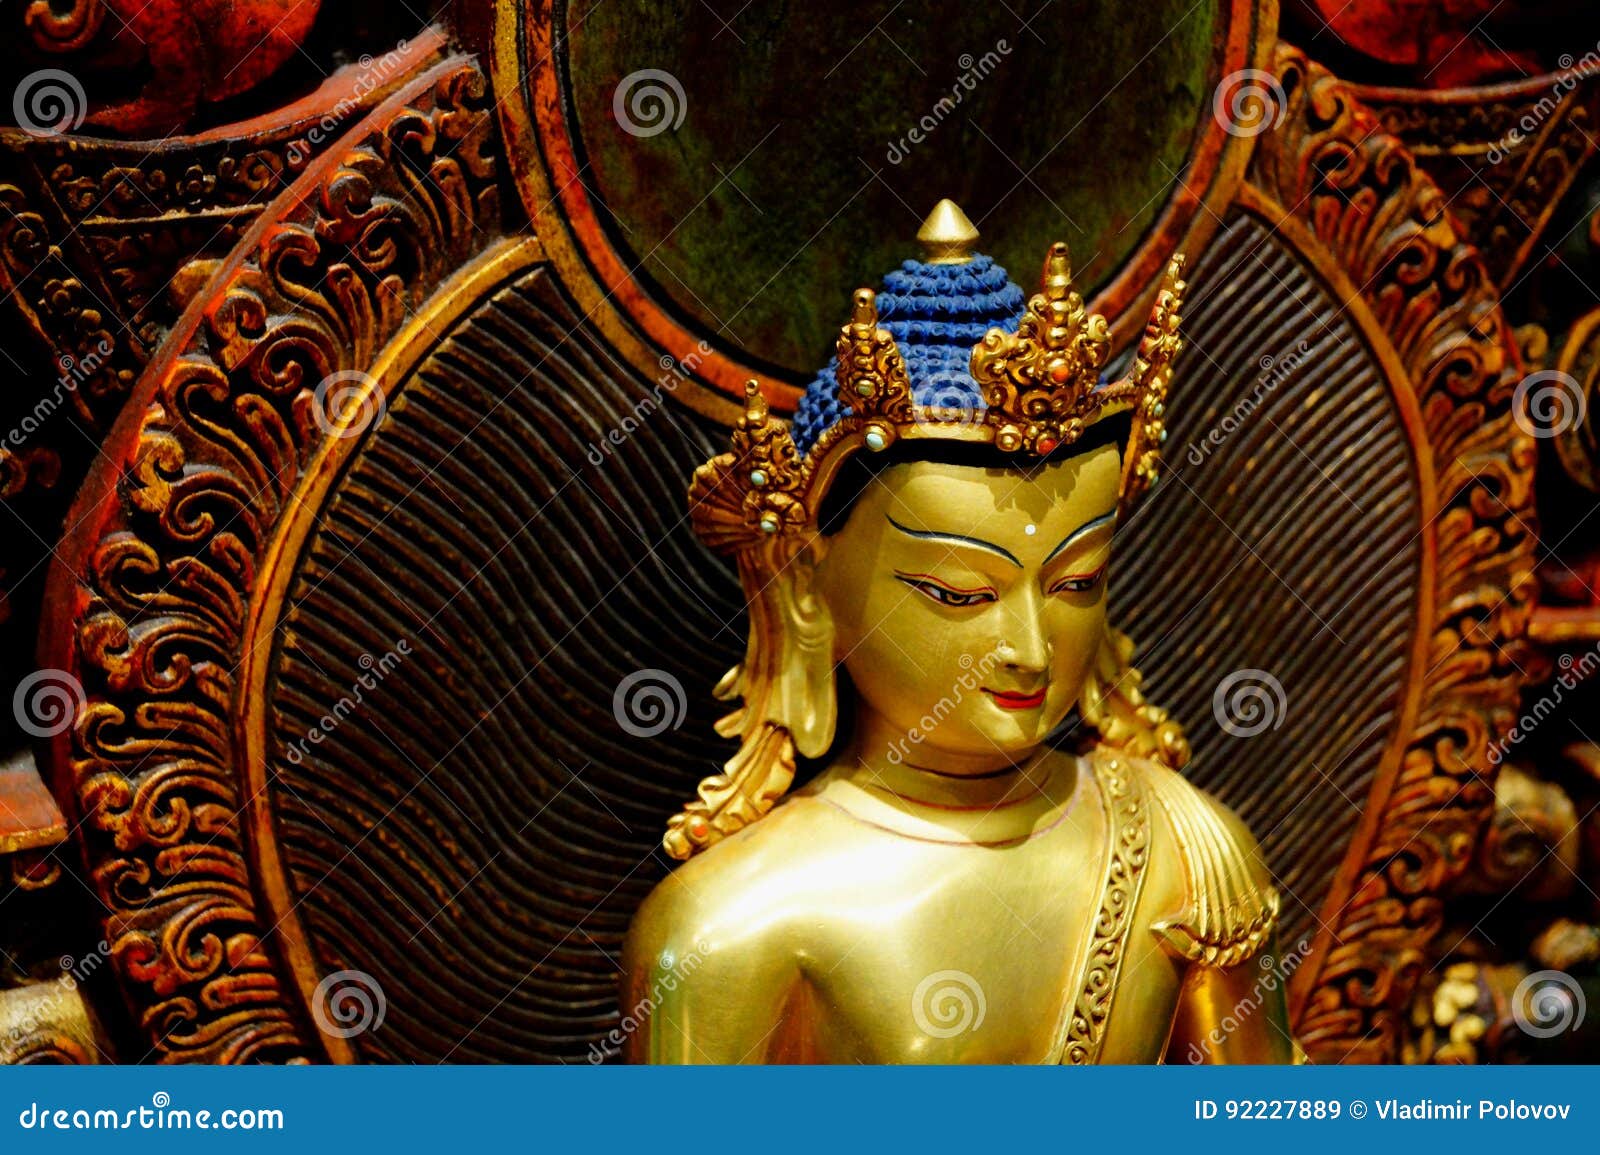 sculpture of the buddha shakyamuni.